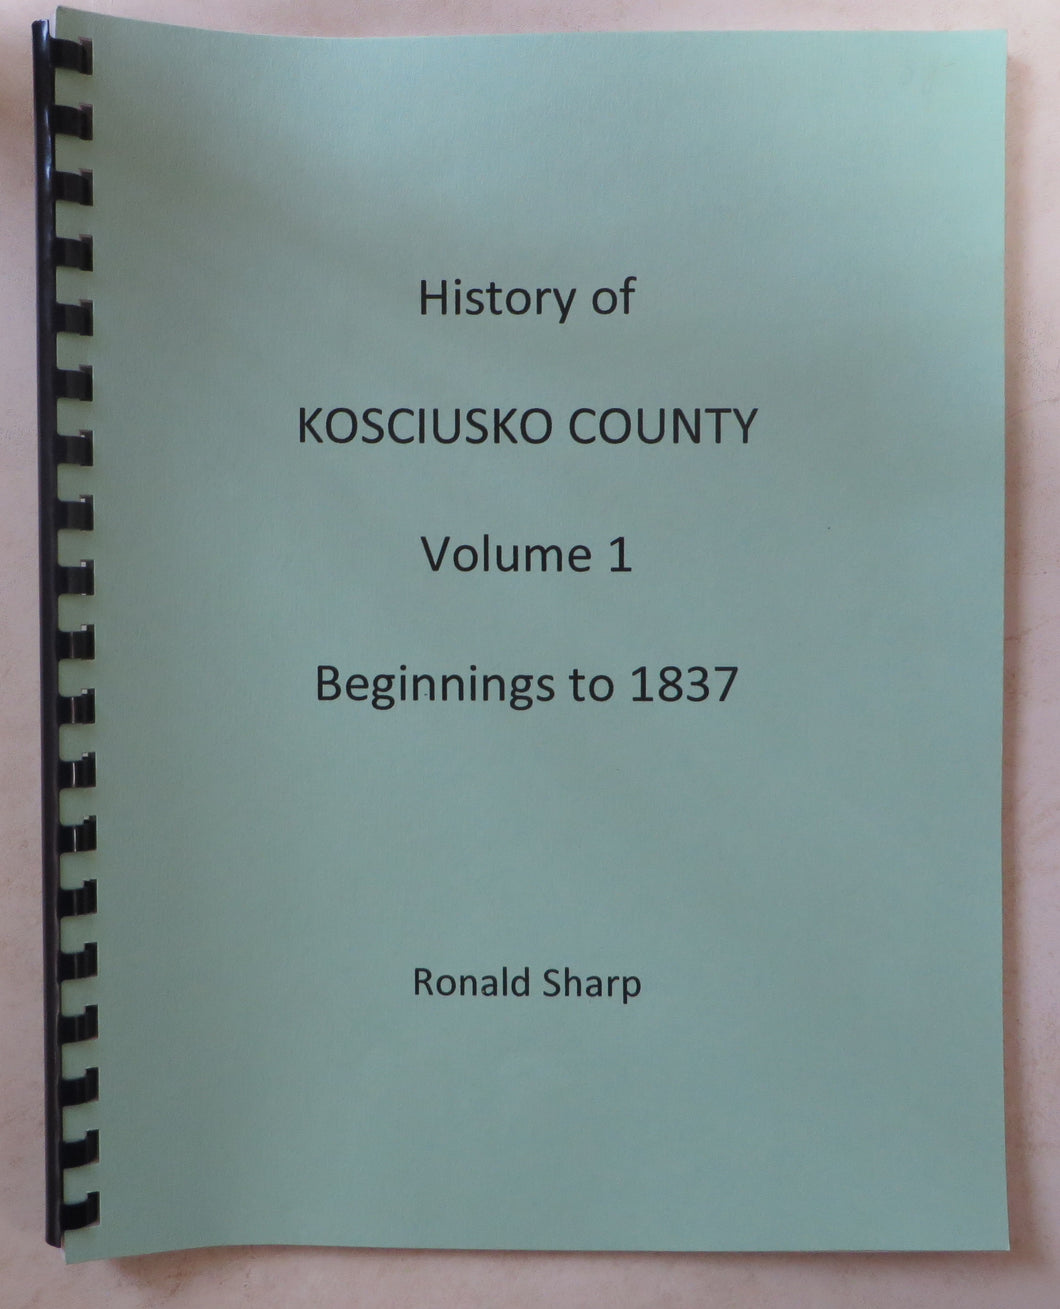 History of Kosciusko County, Volume 1, Beginnings to 1837